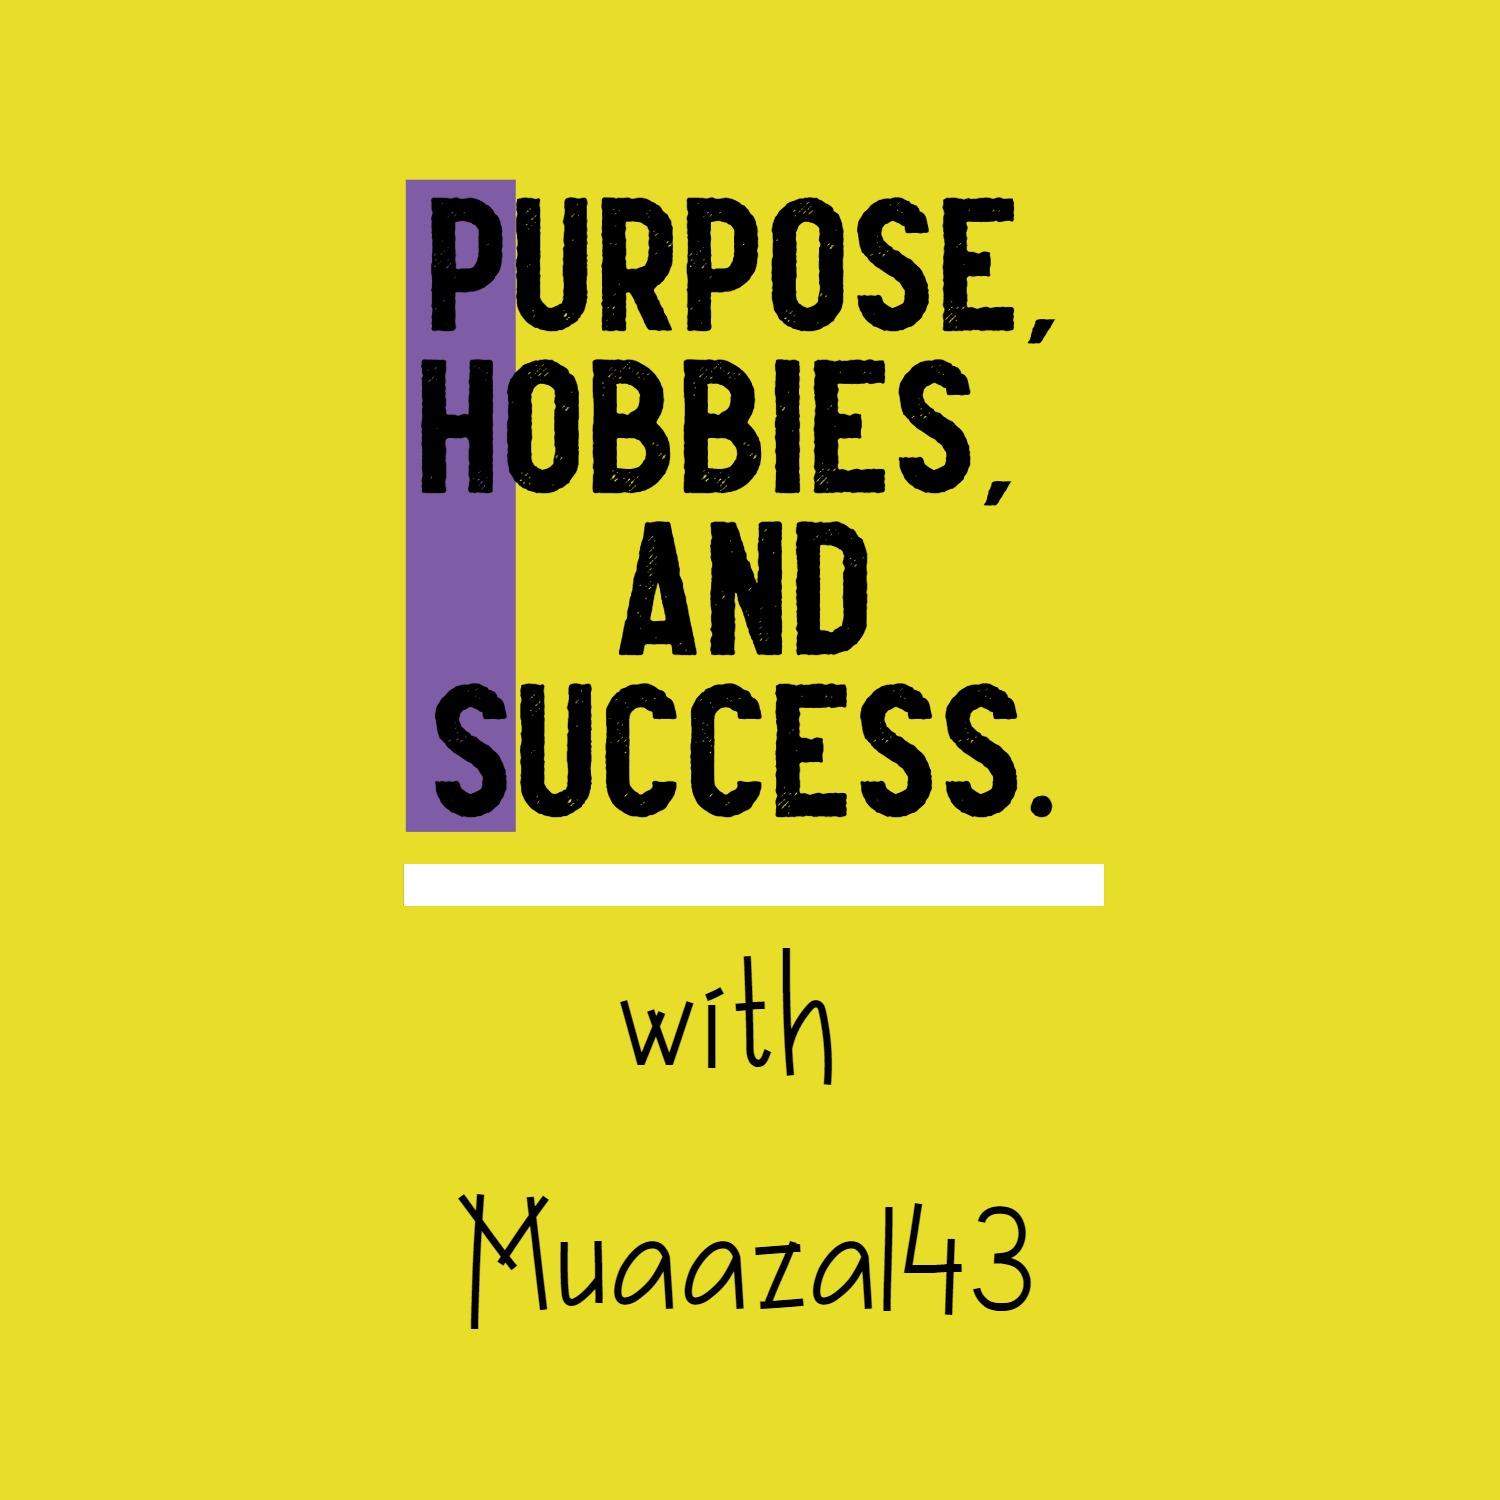 Purpose, Hobbies, and Success. with Muaaza143